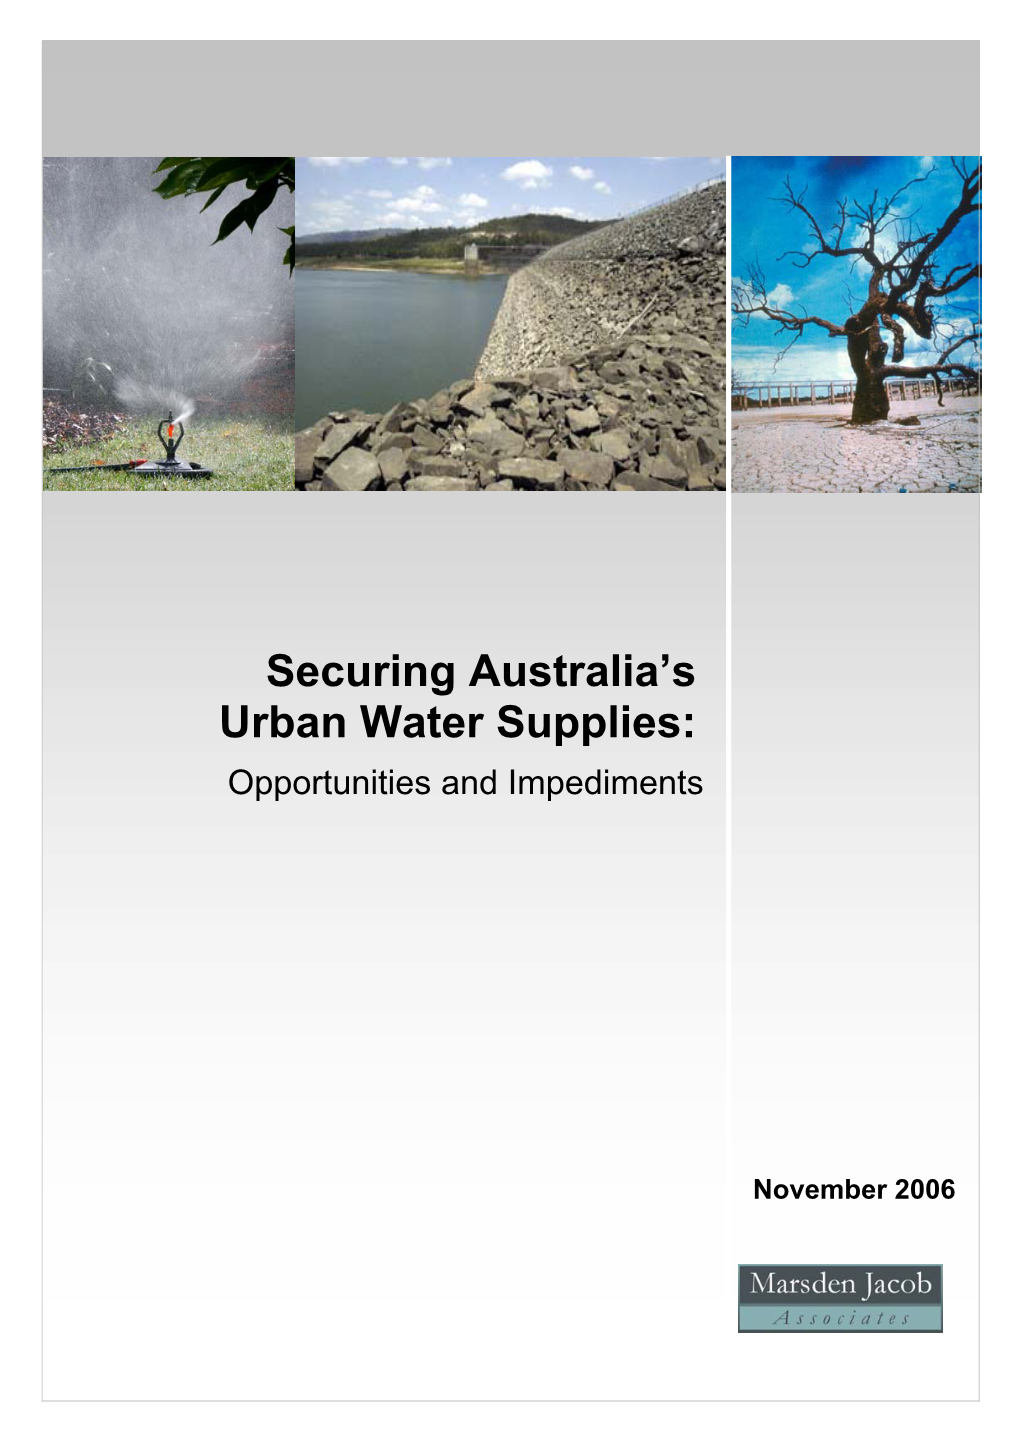 Securing Australia's Urban Water Supplies